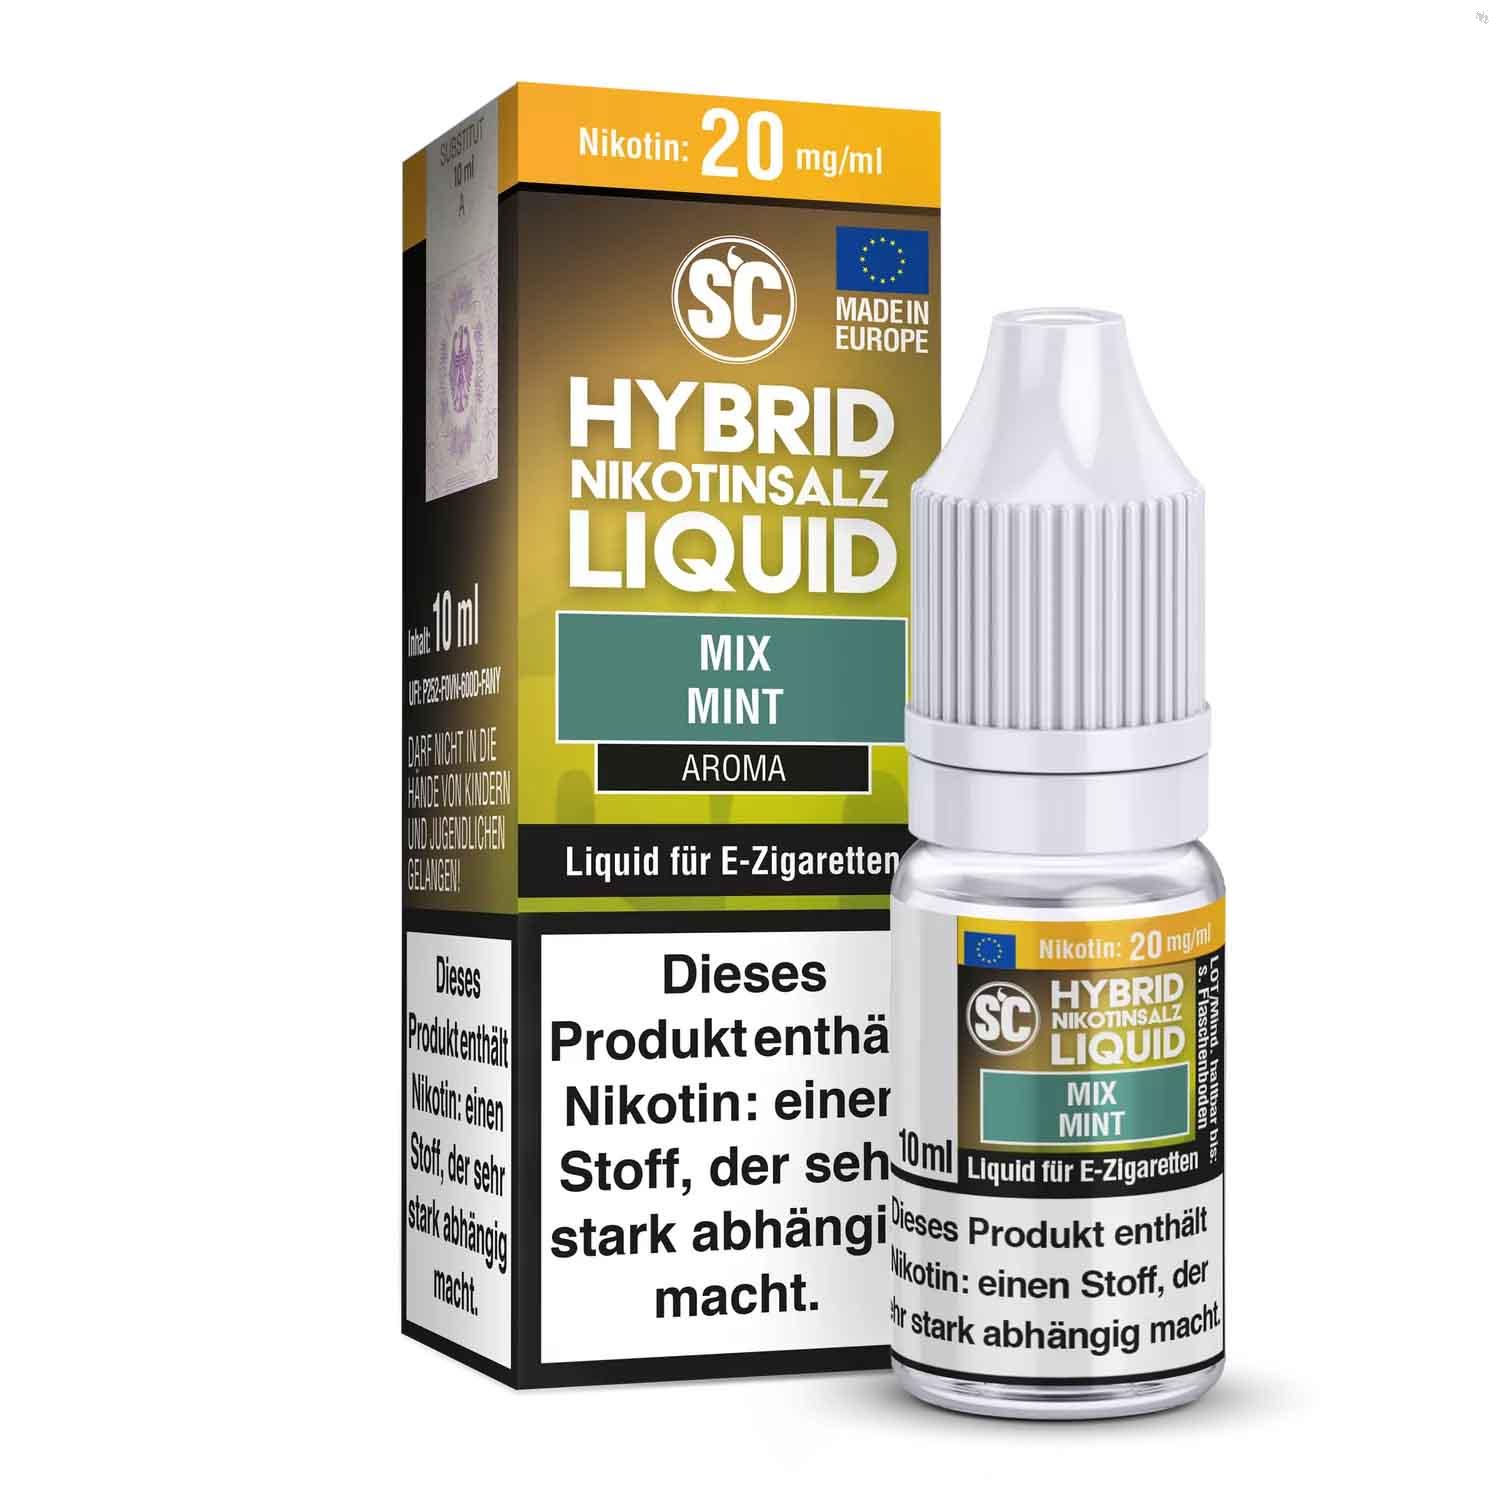 SC - Mix Mint Hybrid Nikotinsalz Liquid ✅ Günstig kaufen! 